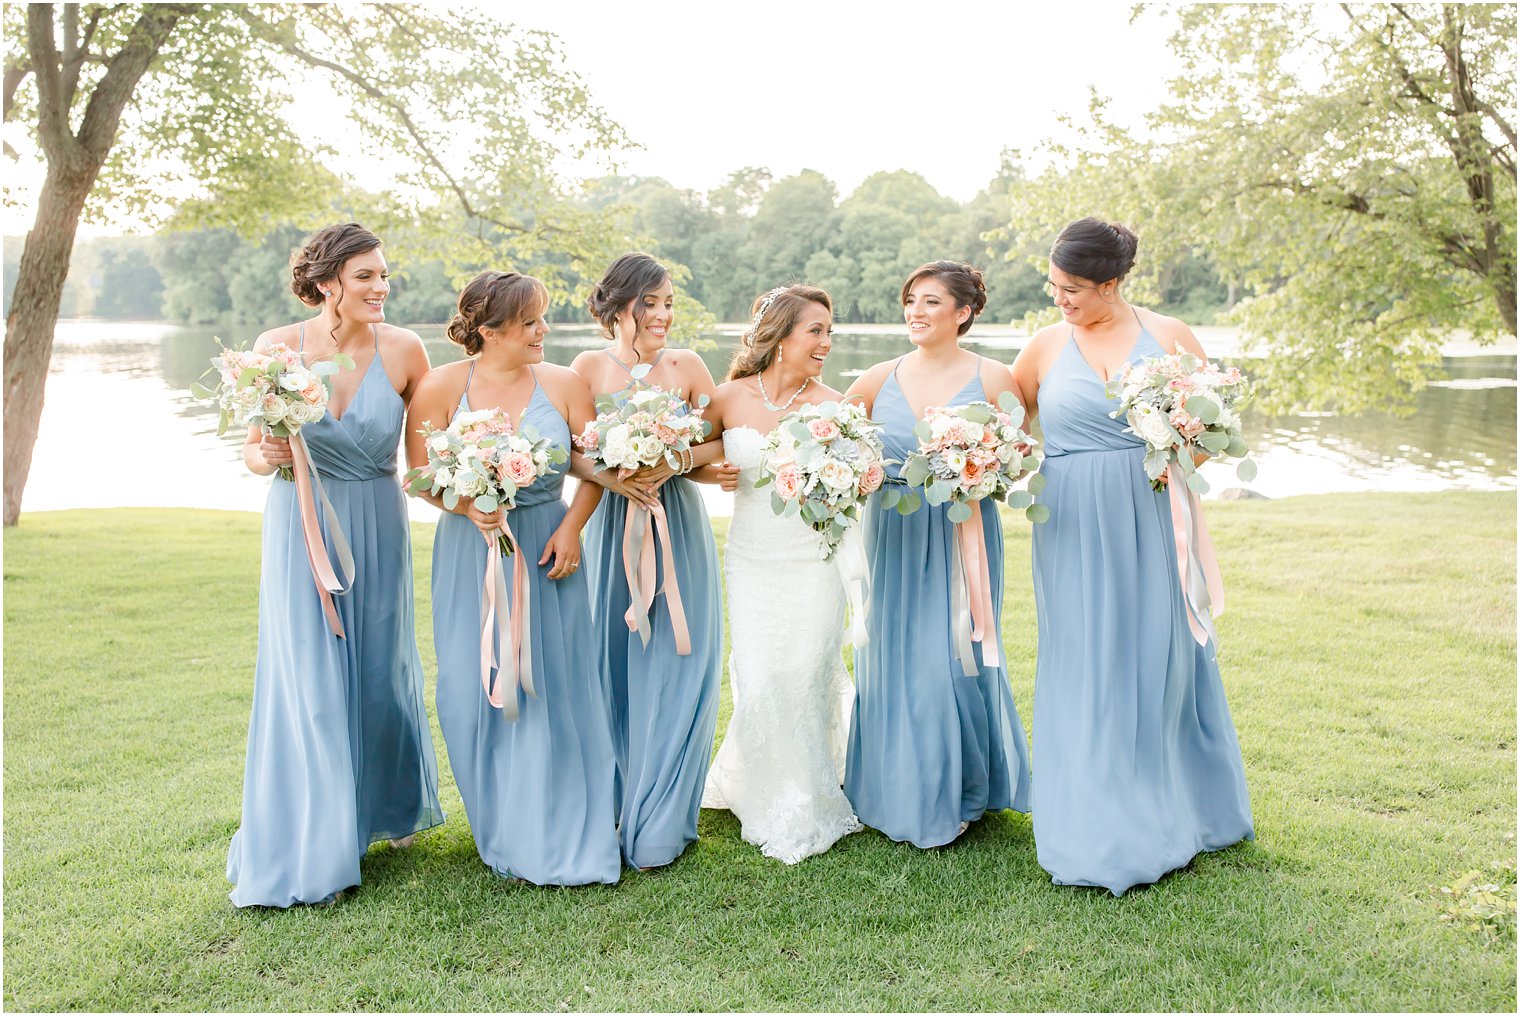 Bridesmaids in blue Bill Levkoff dresses | Idalia Photography